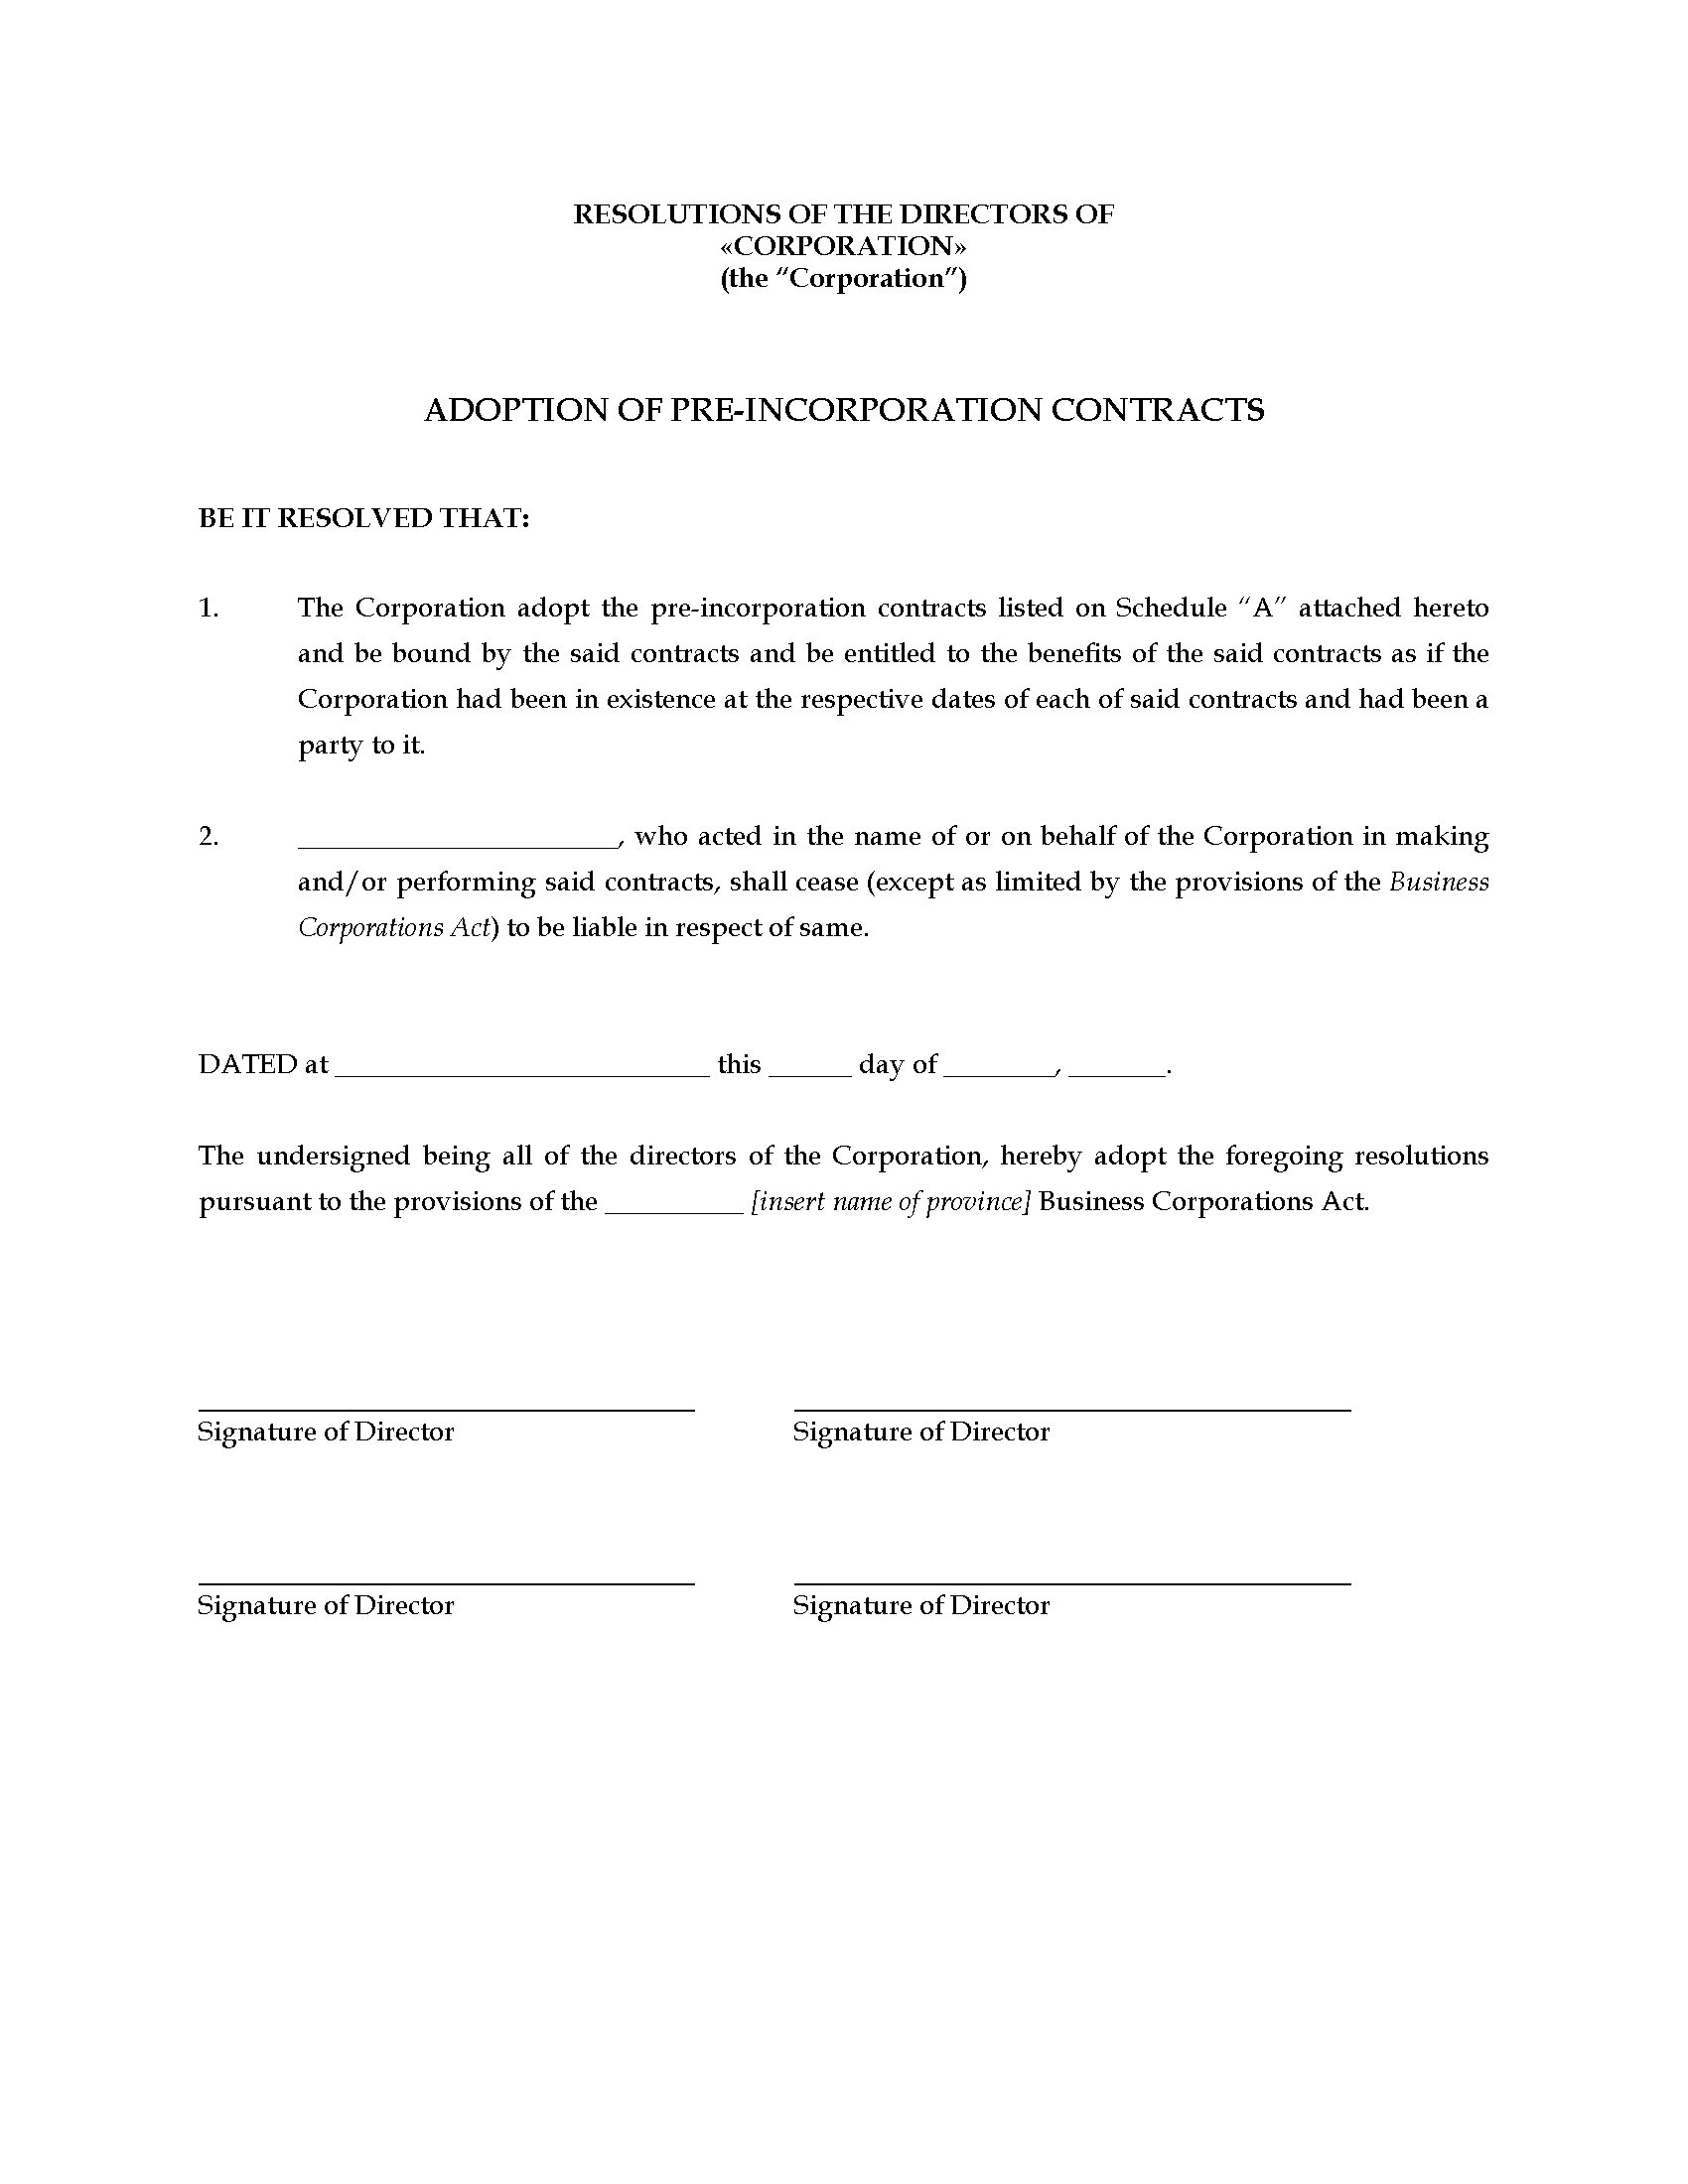 canada directors resolution to adopt pre incorporation contracts